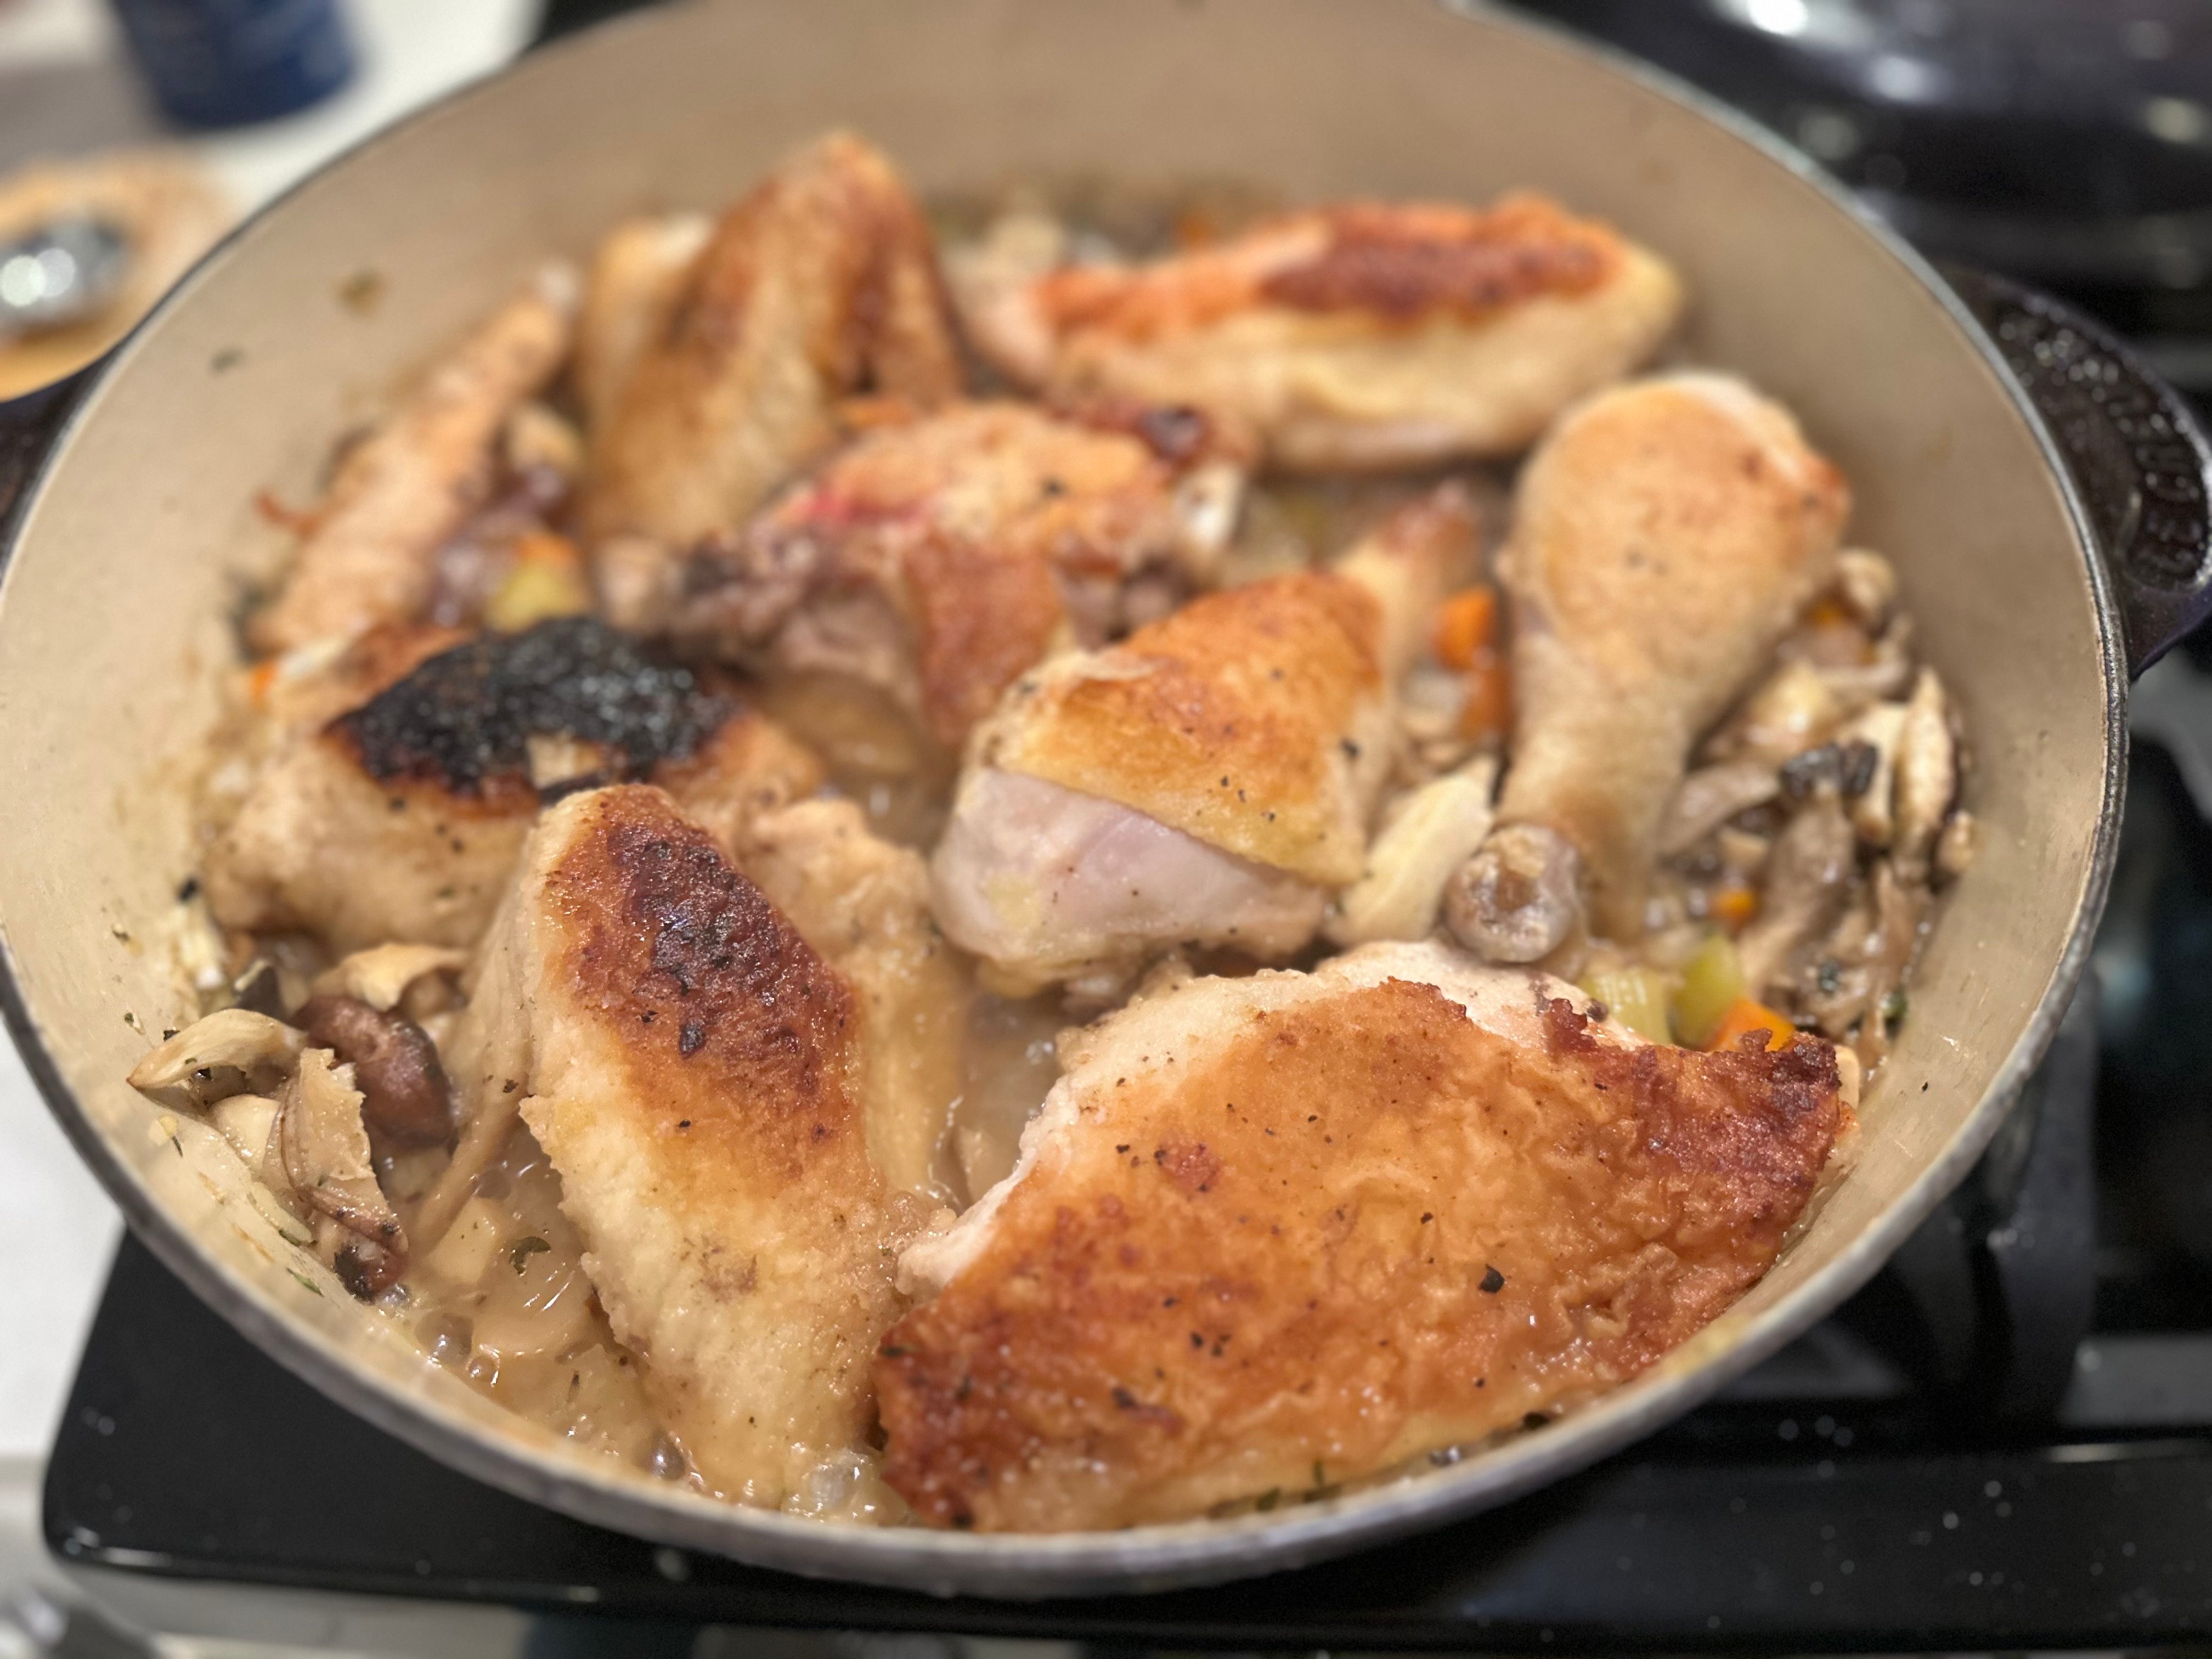 Pan seared chicken with Ashbrook cream sauce